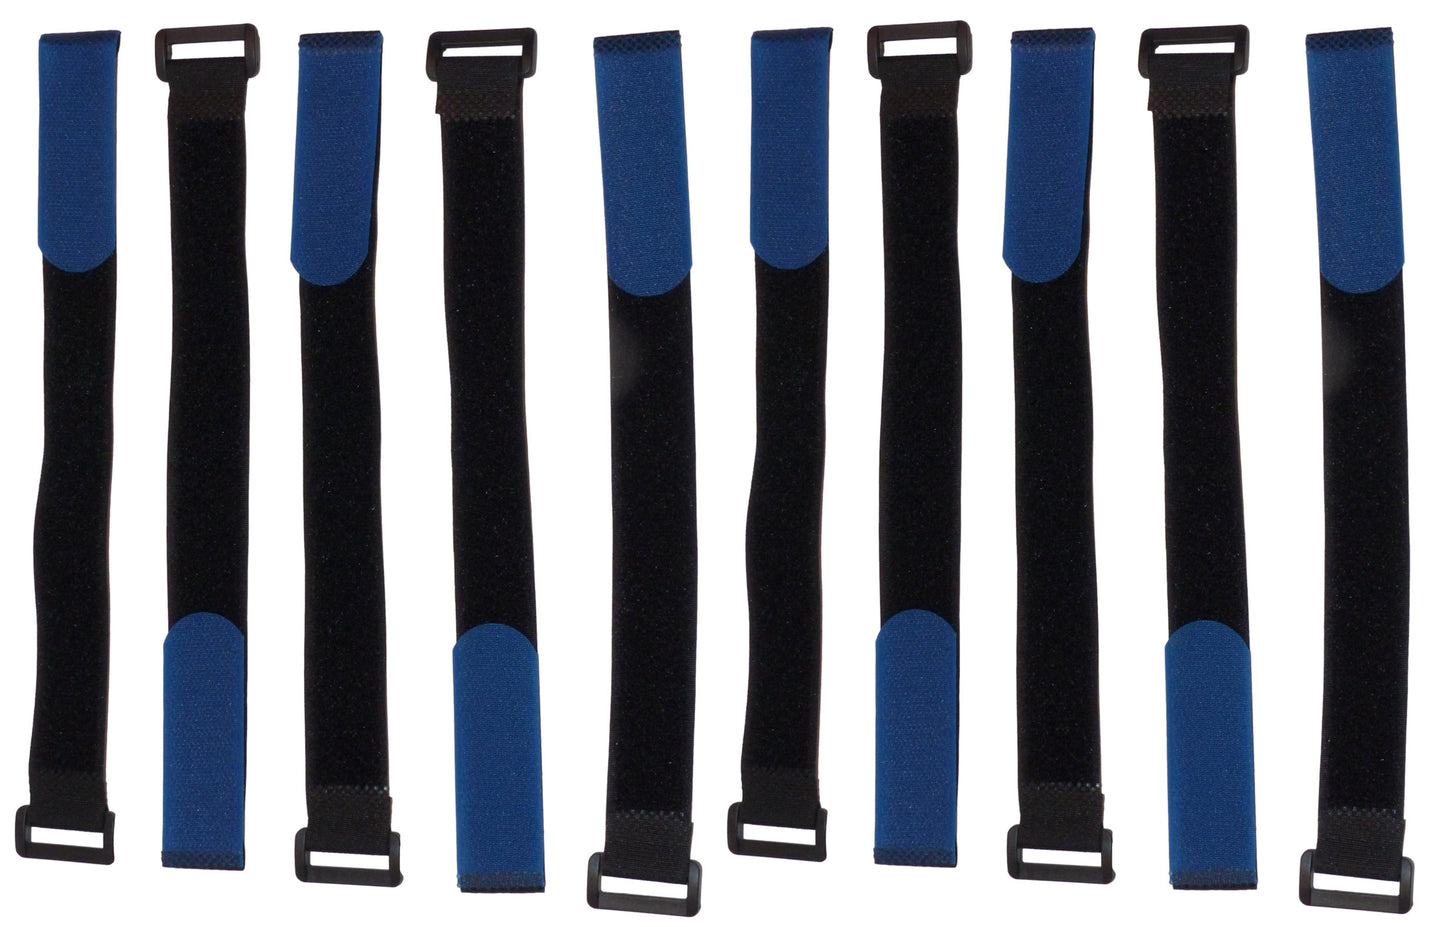 25mm Hook and Loop Cinch Straps in Black, Blue End (Pack of 10)